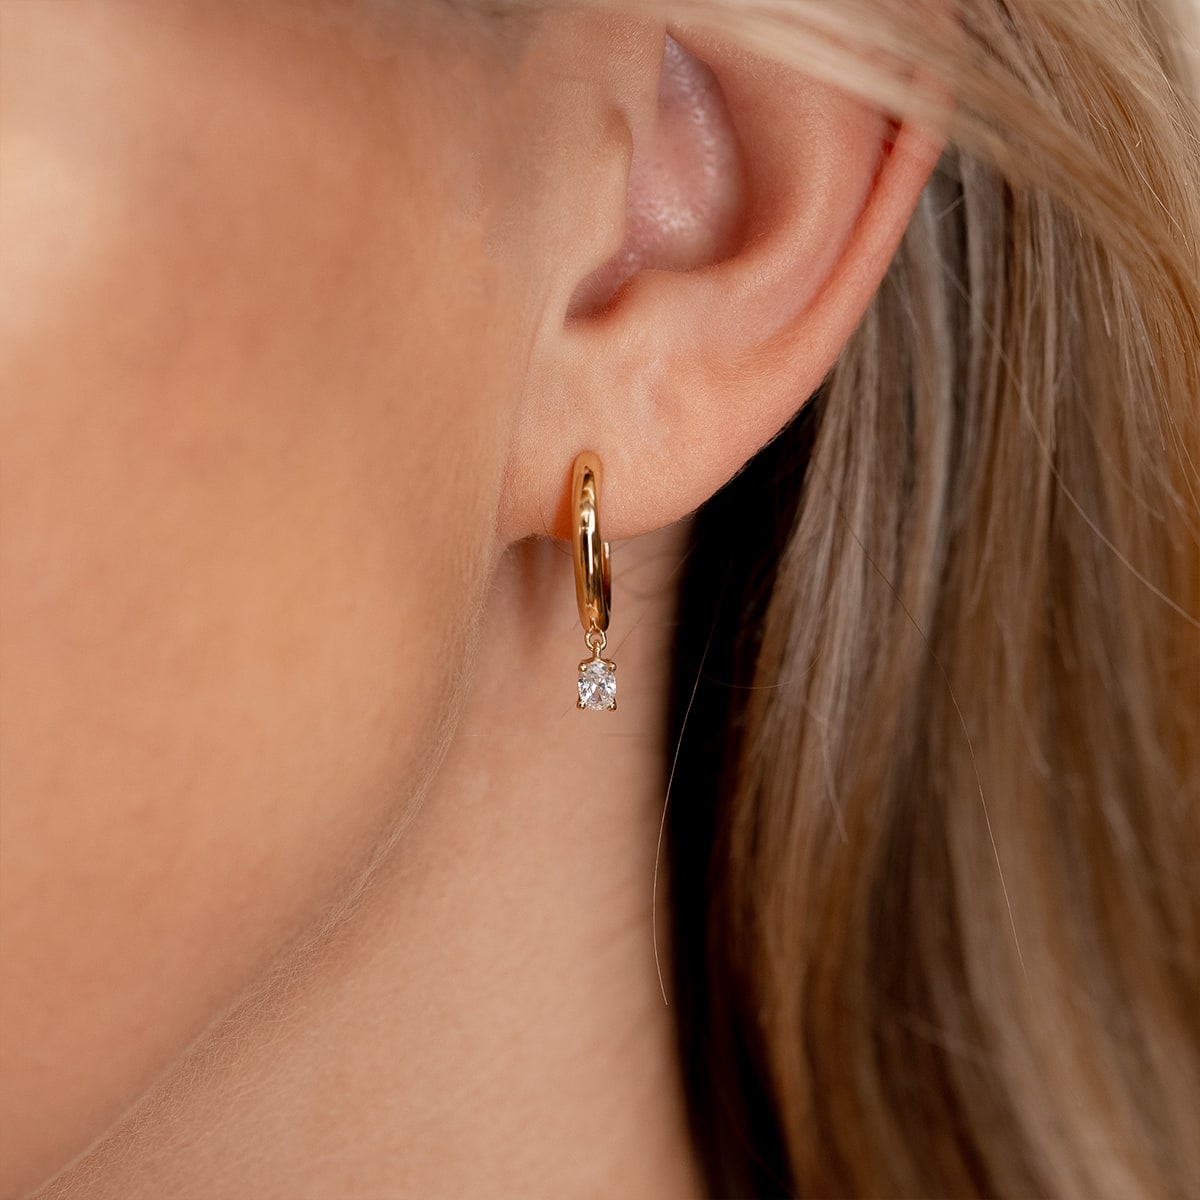 Woman wearing gold hoop earrings